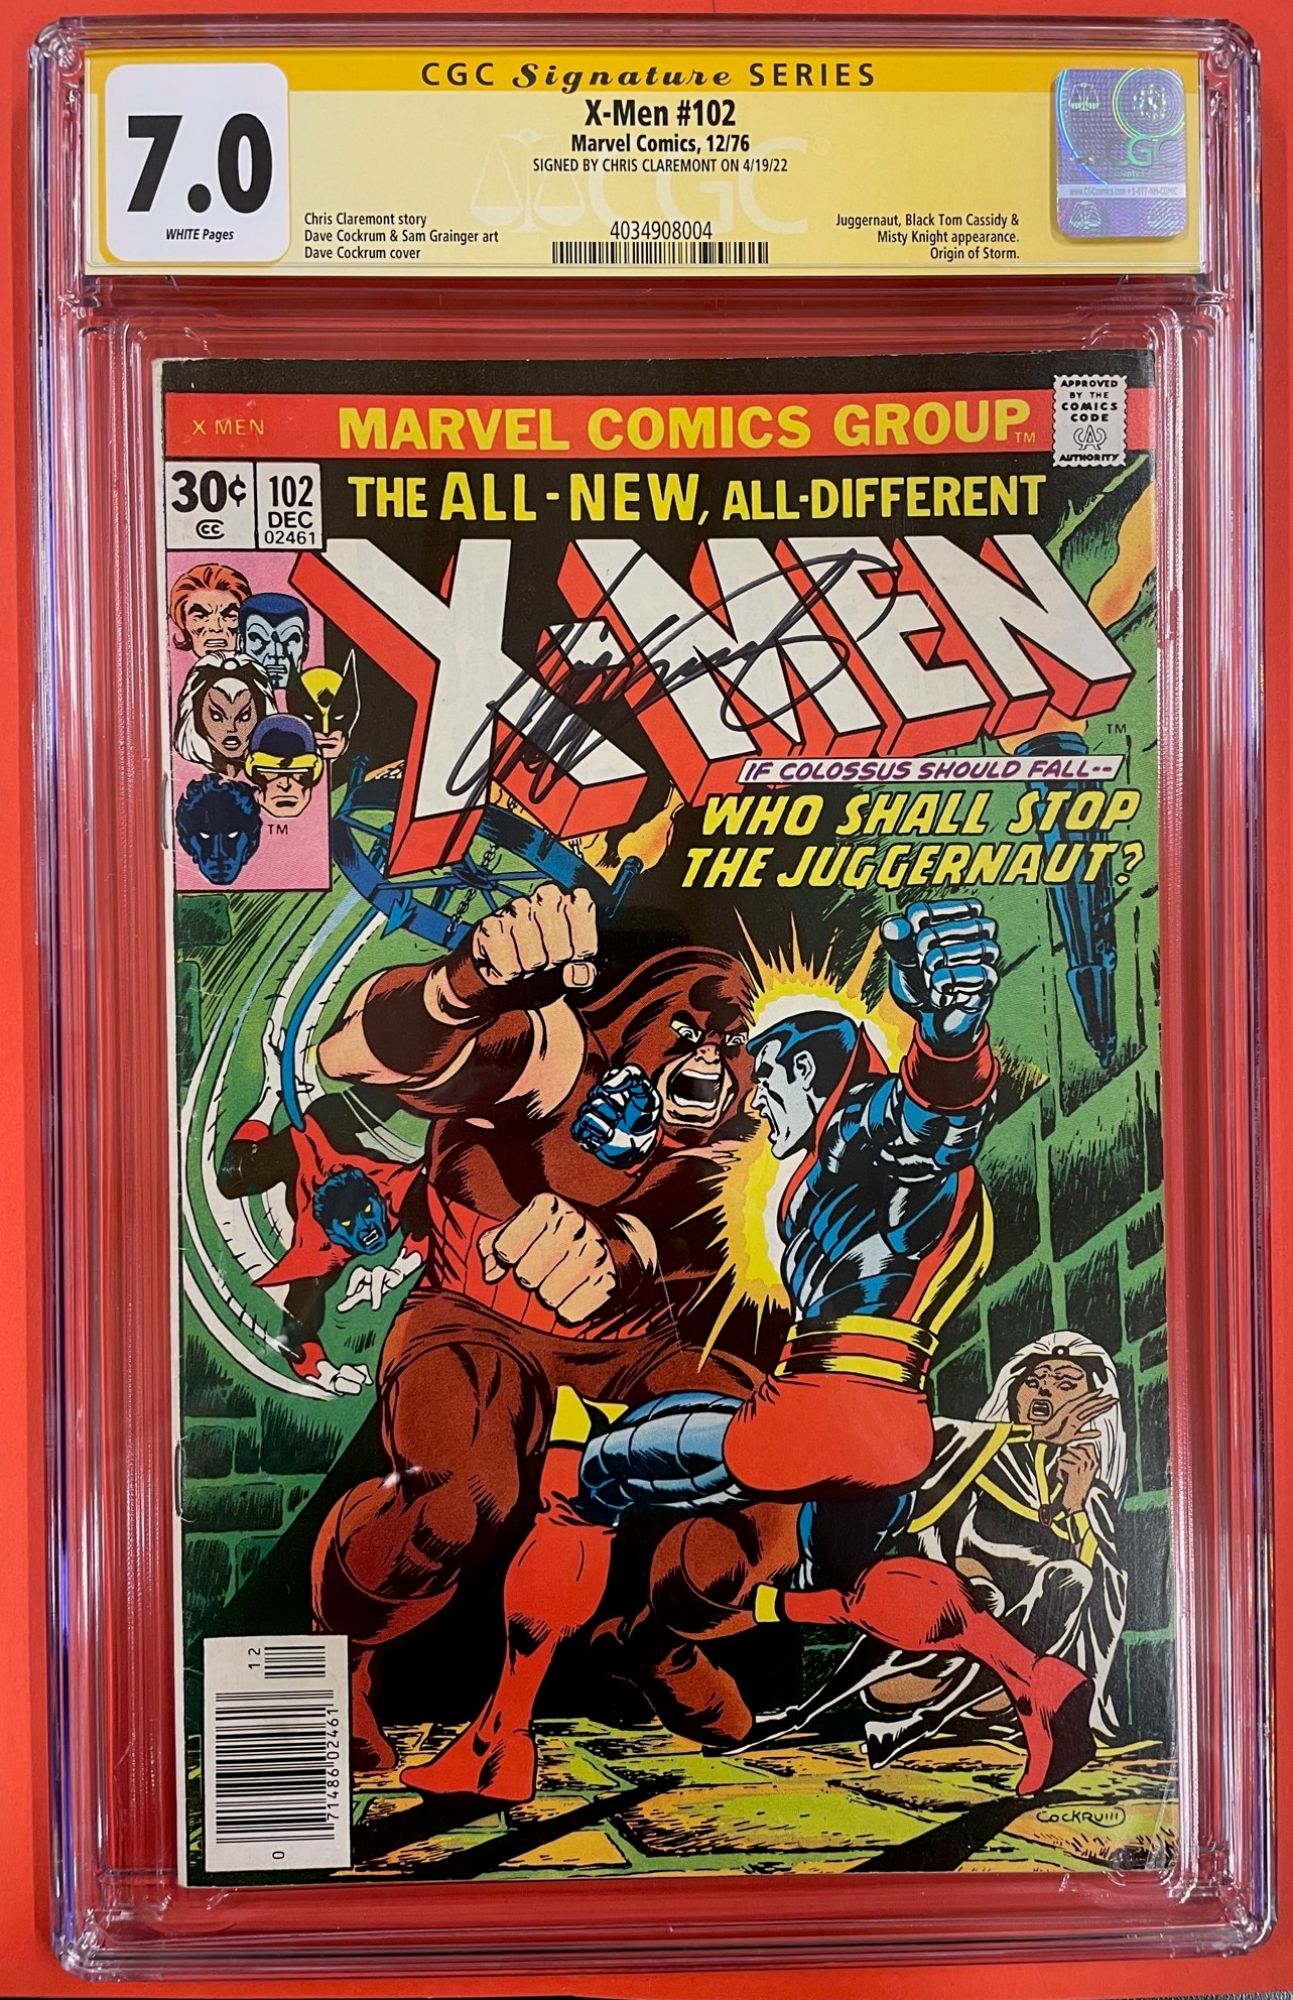 X-Men #102, Dec 1976, 7.0 FN/VF CGC Signed by Chris Claremont